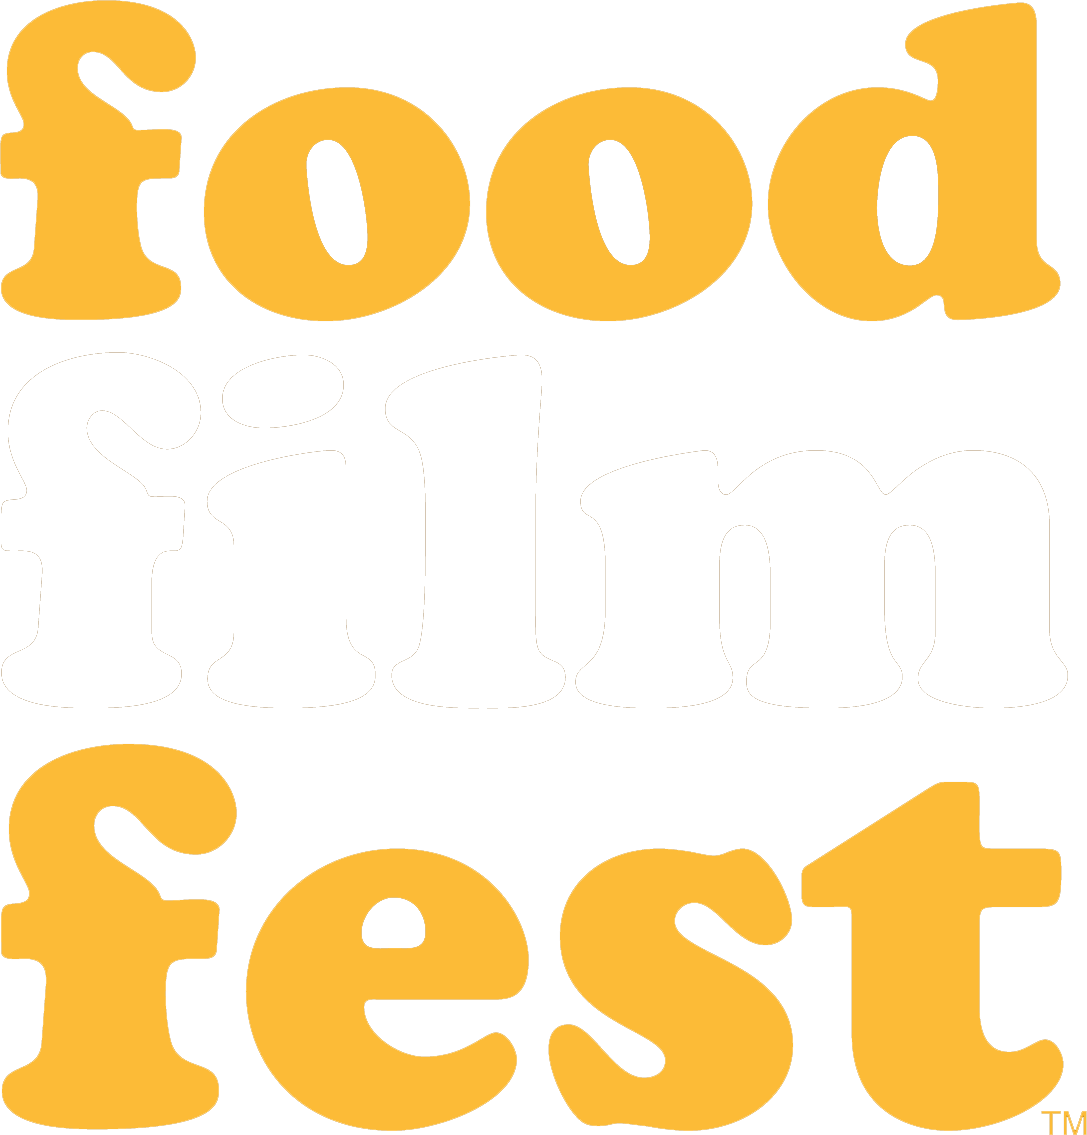 The Food Film Festival